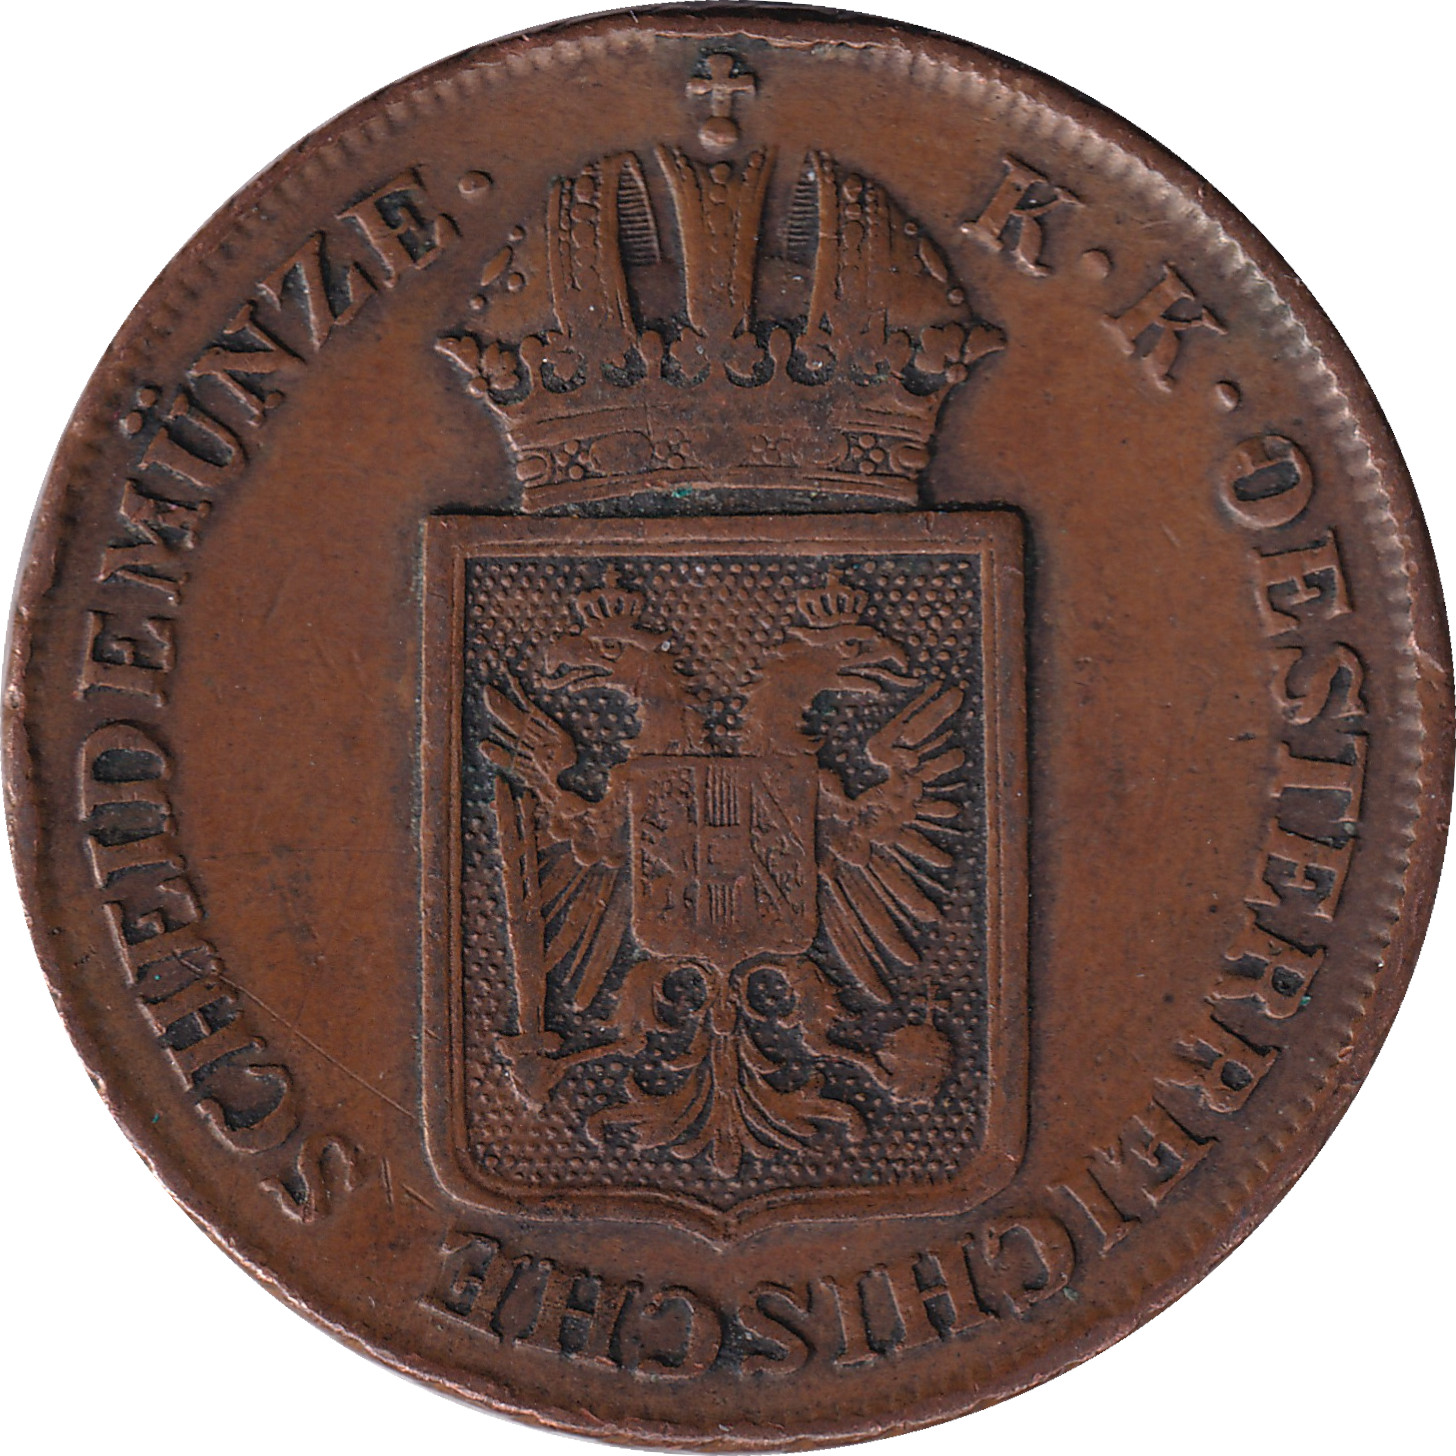 2 kreuzer - Franz Jospeh I - Shield